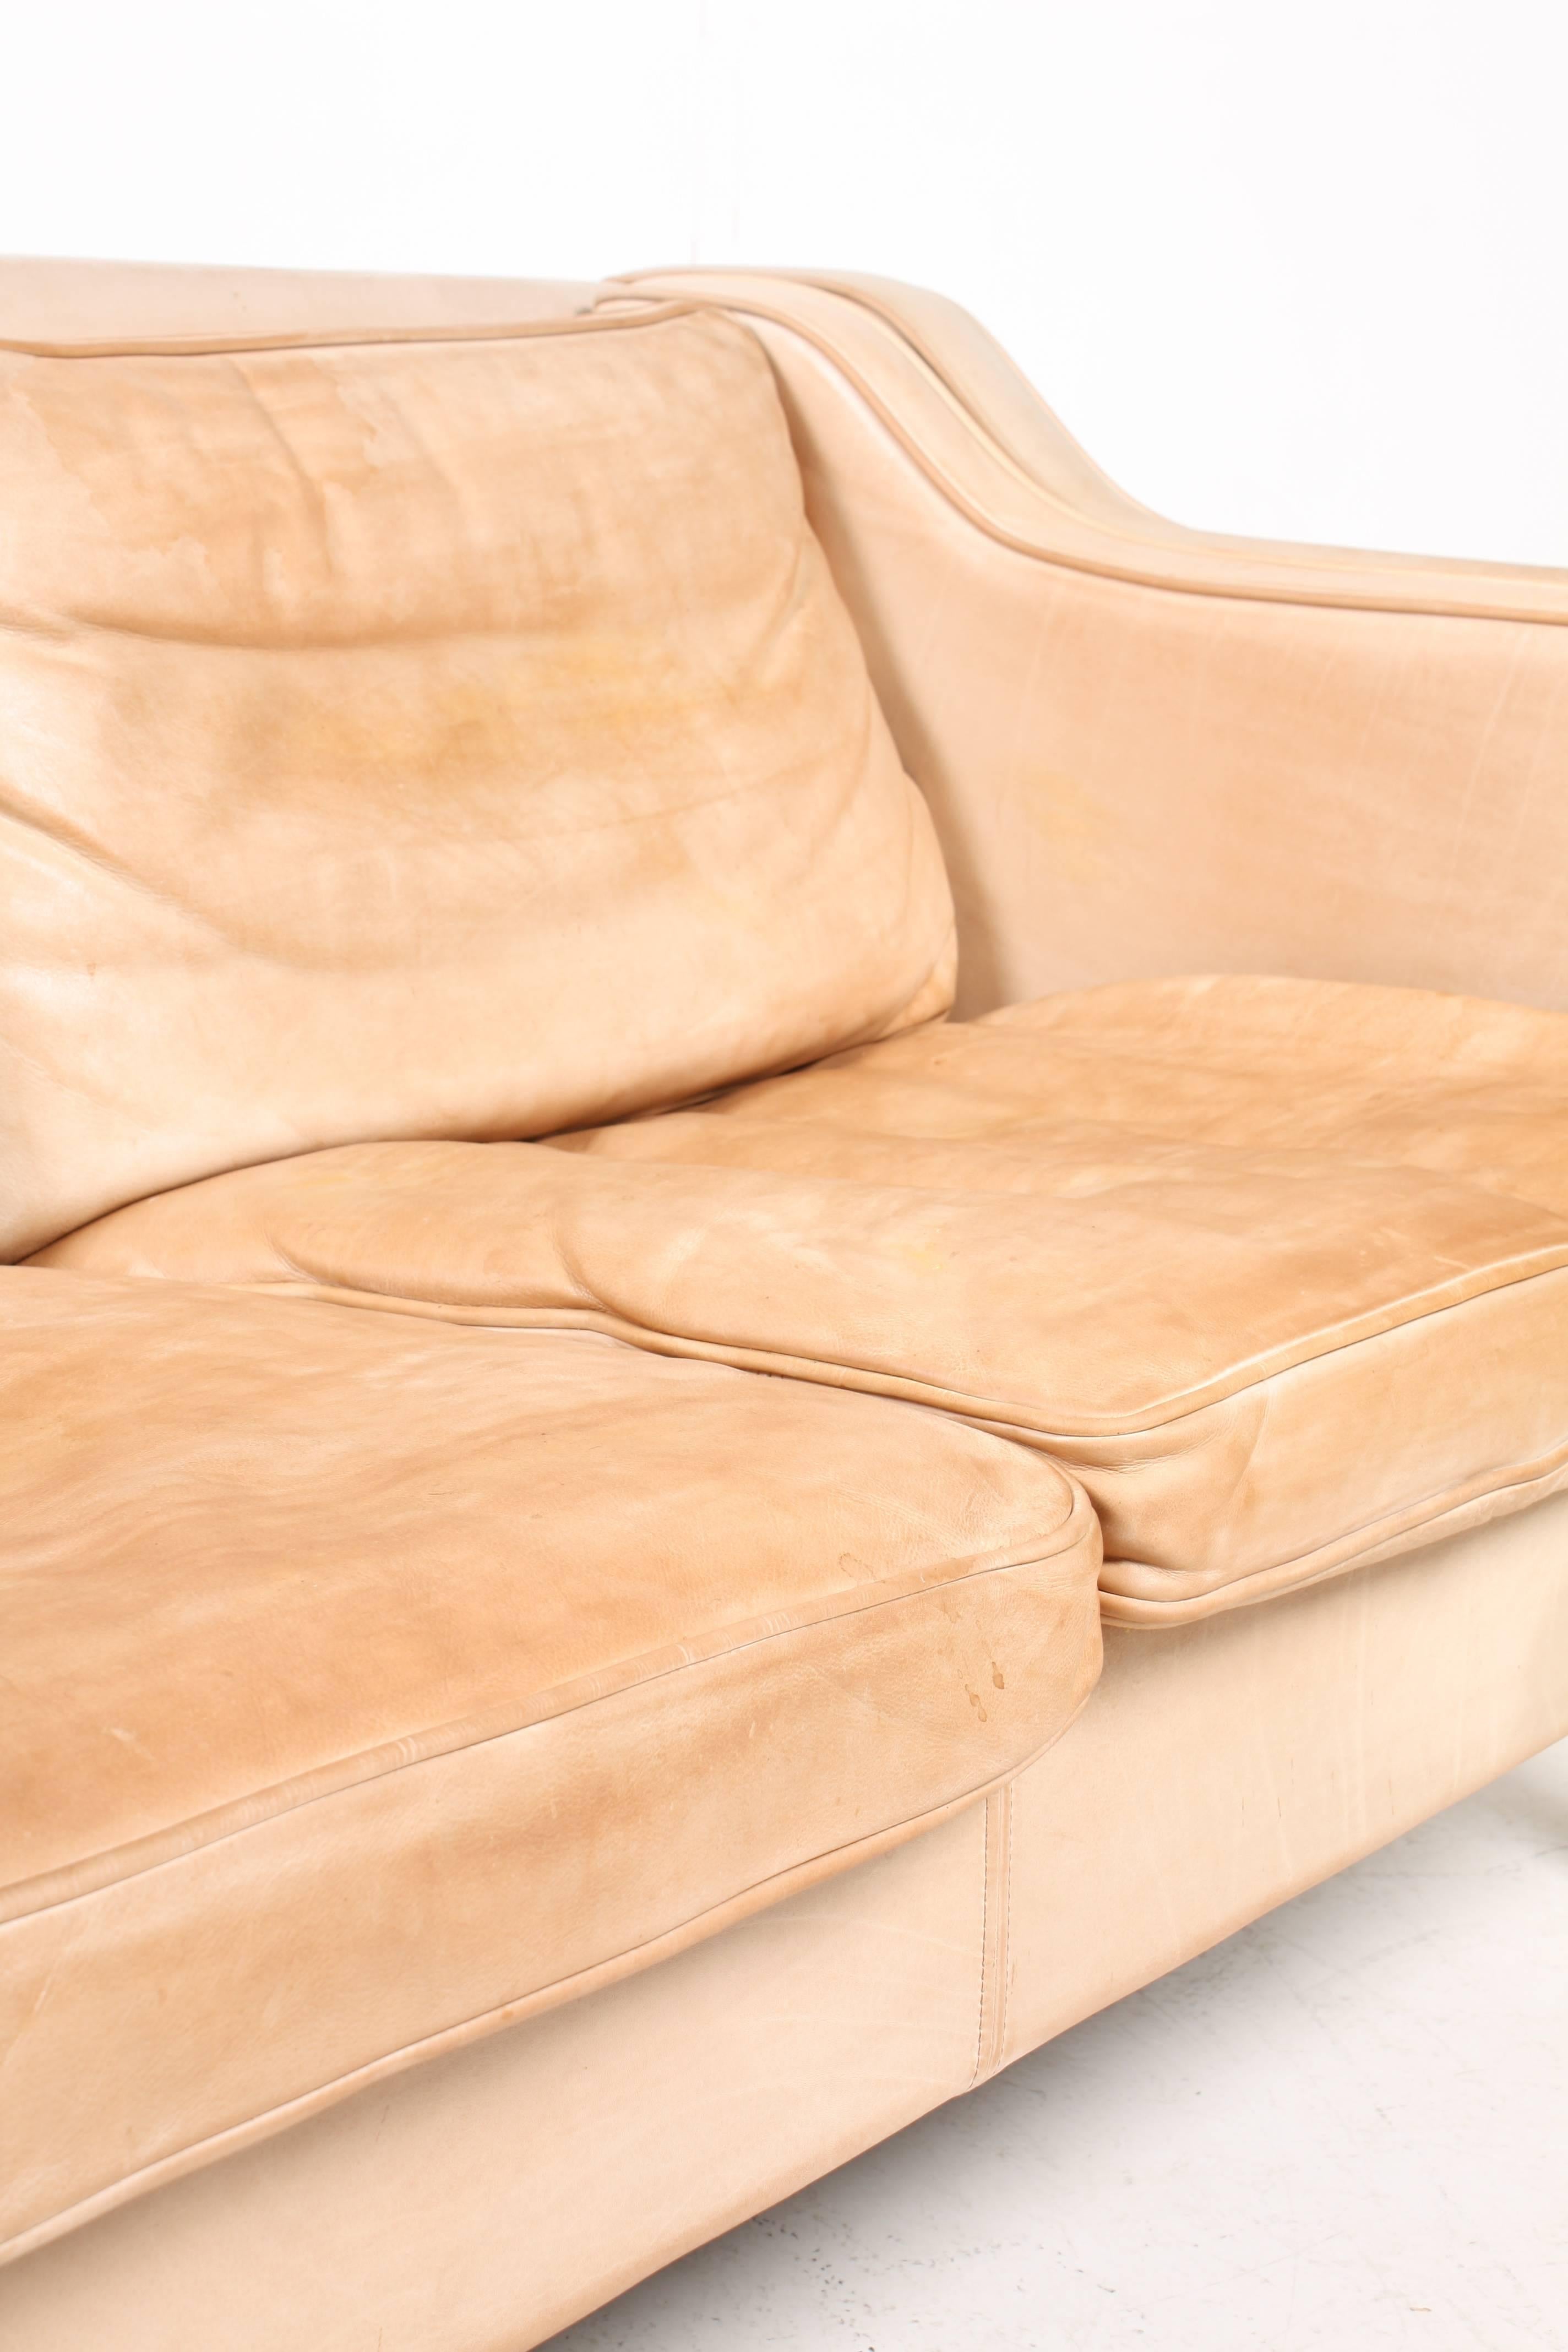 Late 20th Century Danish Leather Sofa by Mogens Hansen